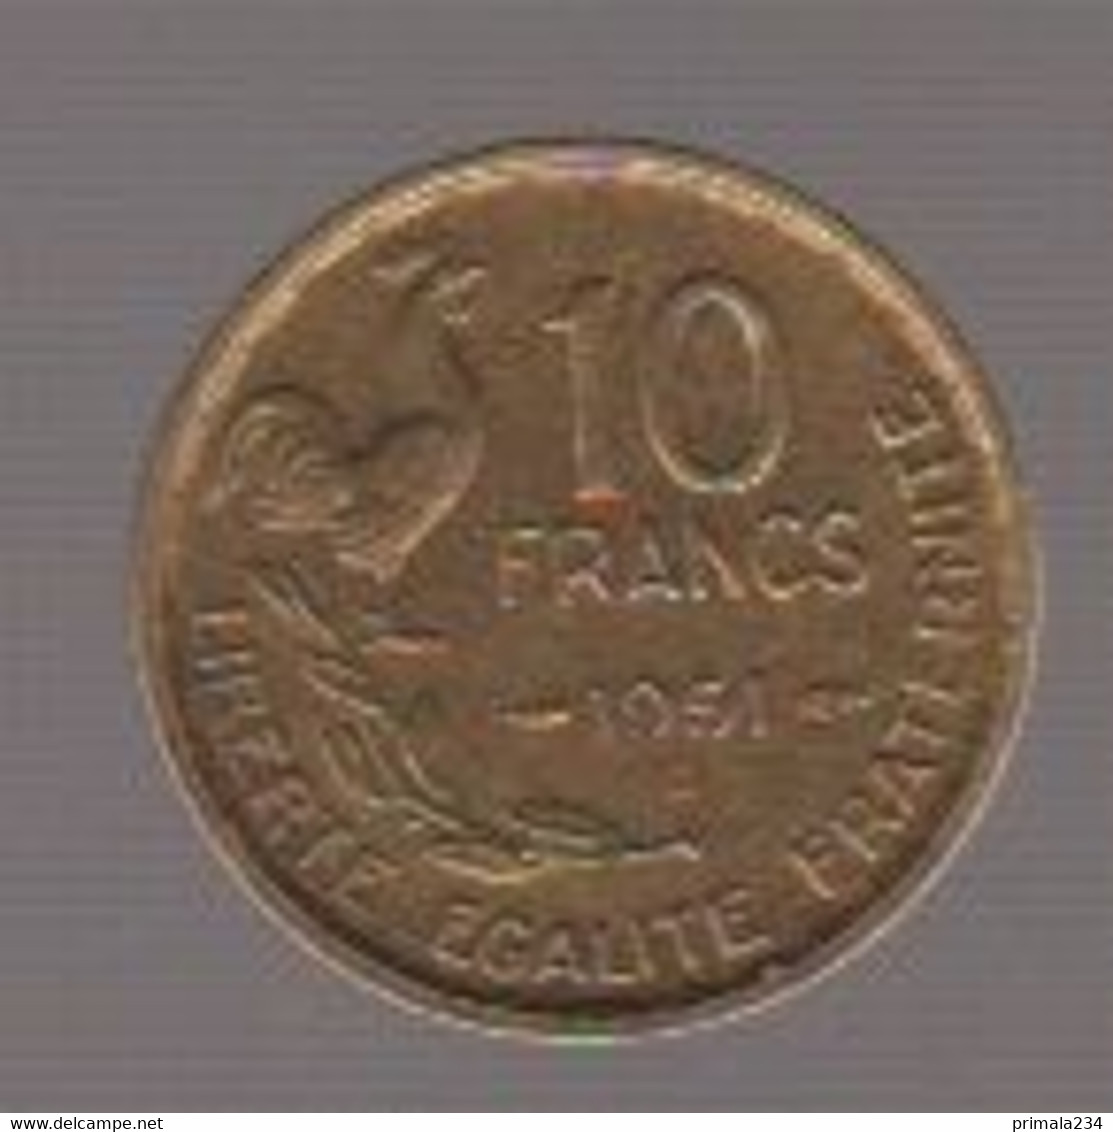 10 FRANCS 1951 B - - Altri – Europa